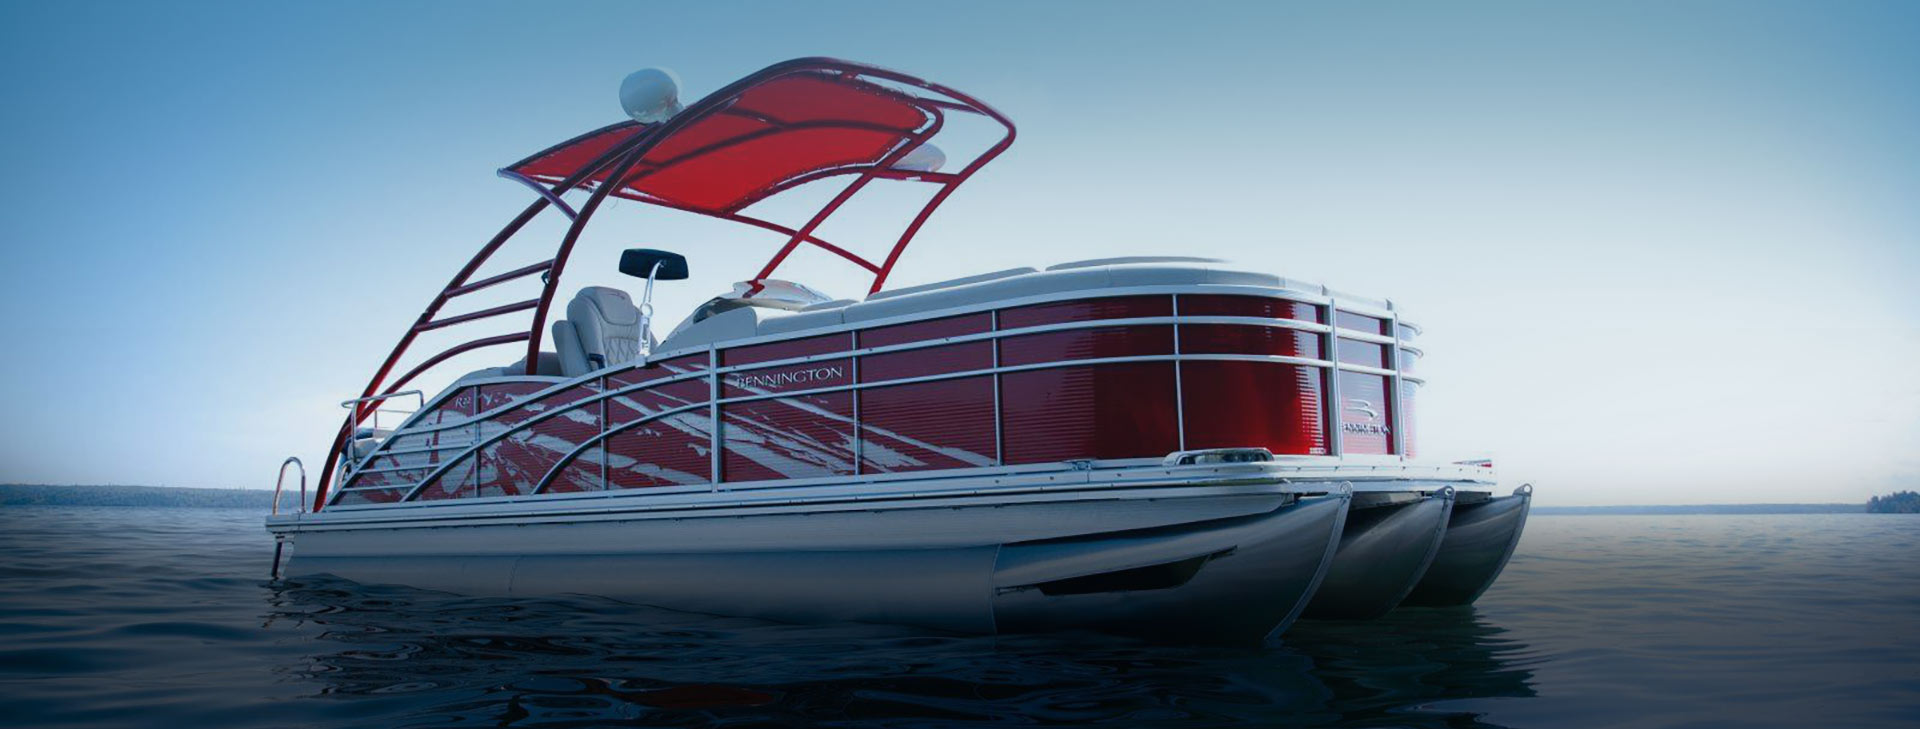 Kooper’s Marine, LLC | New and Used Pontoon Boats for Sale